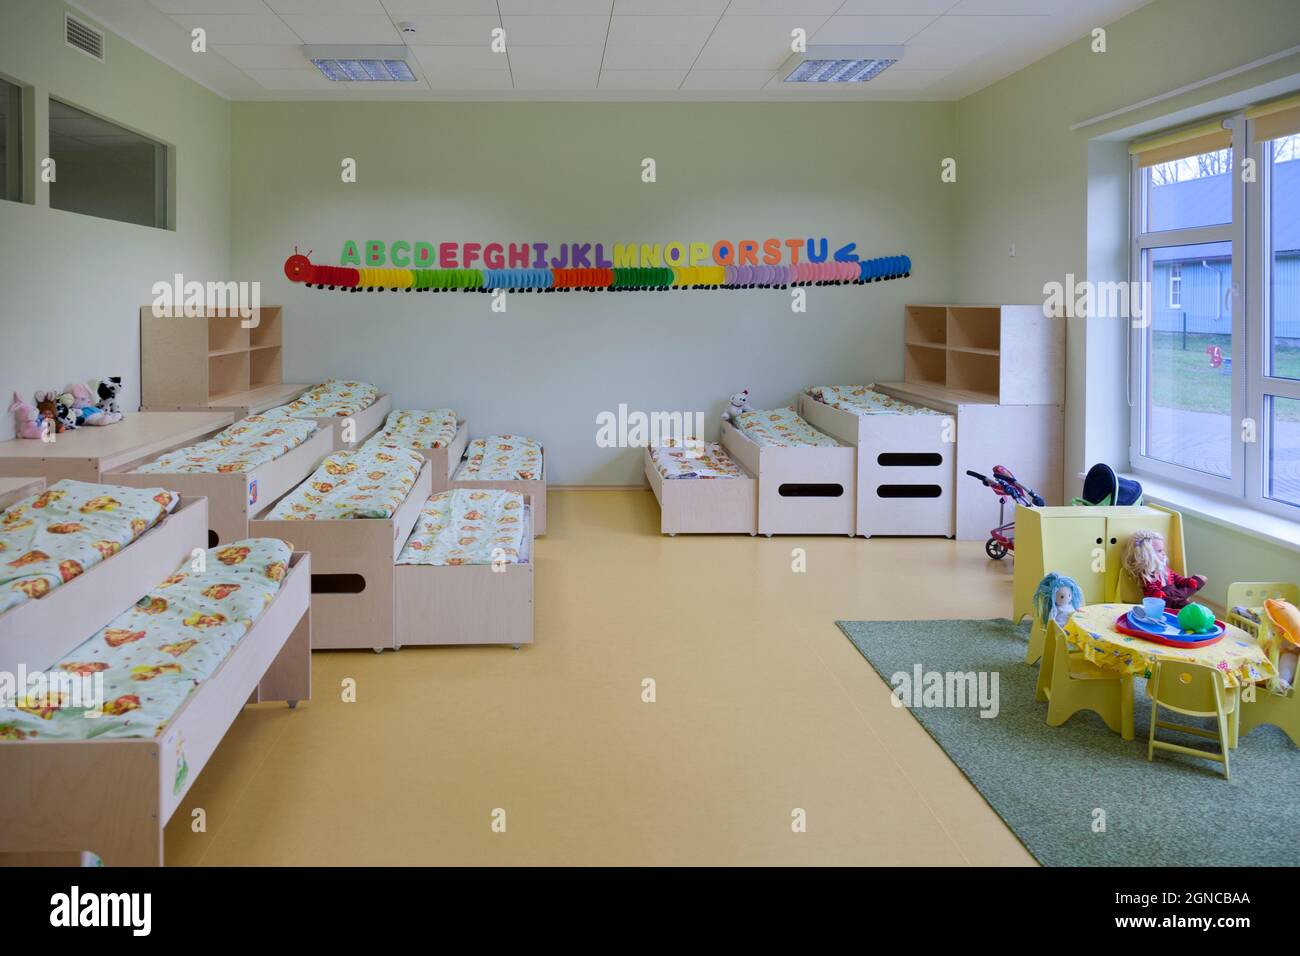 25+ Irresistible Playroom Design Ideas - Best Playroom Decorating Ideas